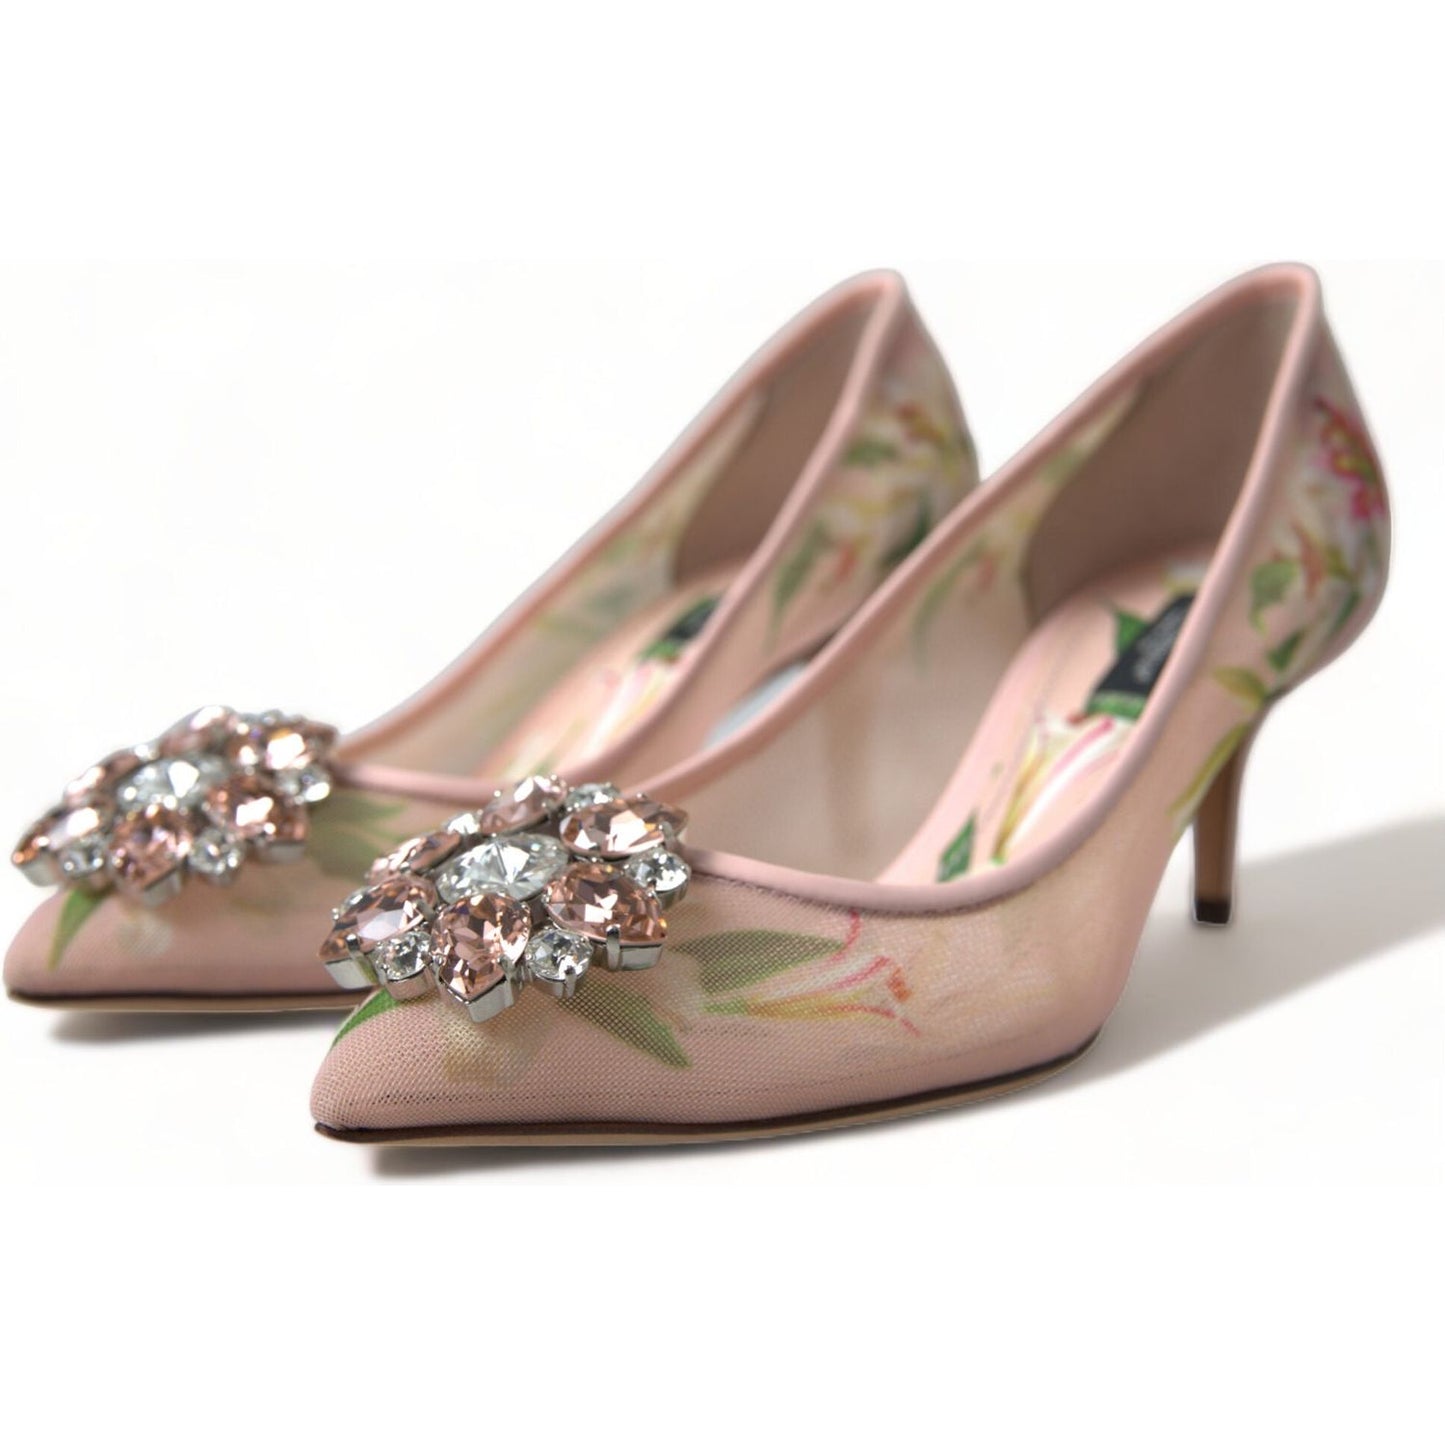 Dolce & Gabbana Elegant Pink Floral Crystal Pumps pink-floral-crystal-heels-pumps-shoes 465A9561-bg-scaled-57956a35-8df.jpg